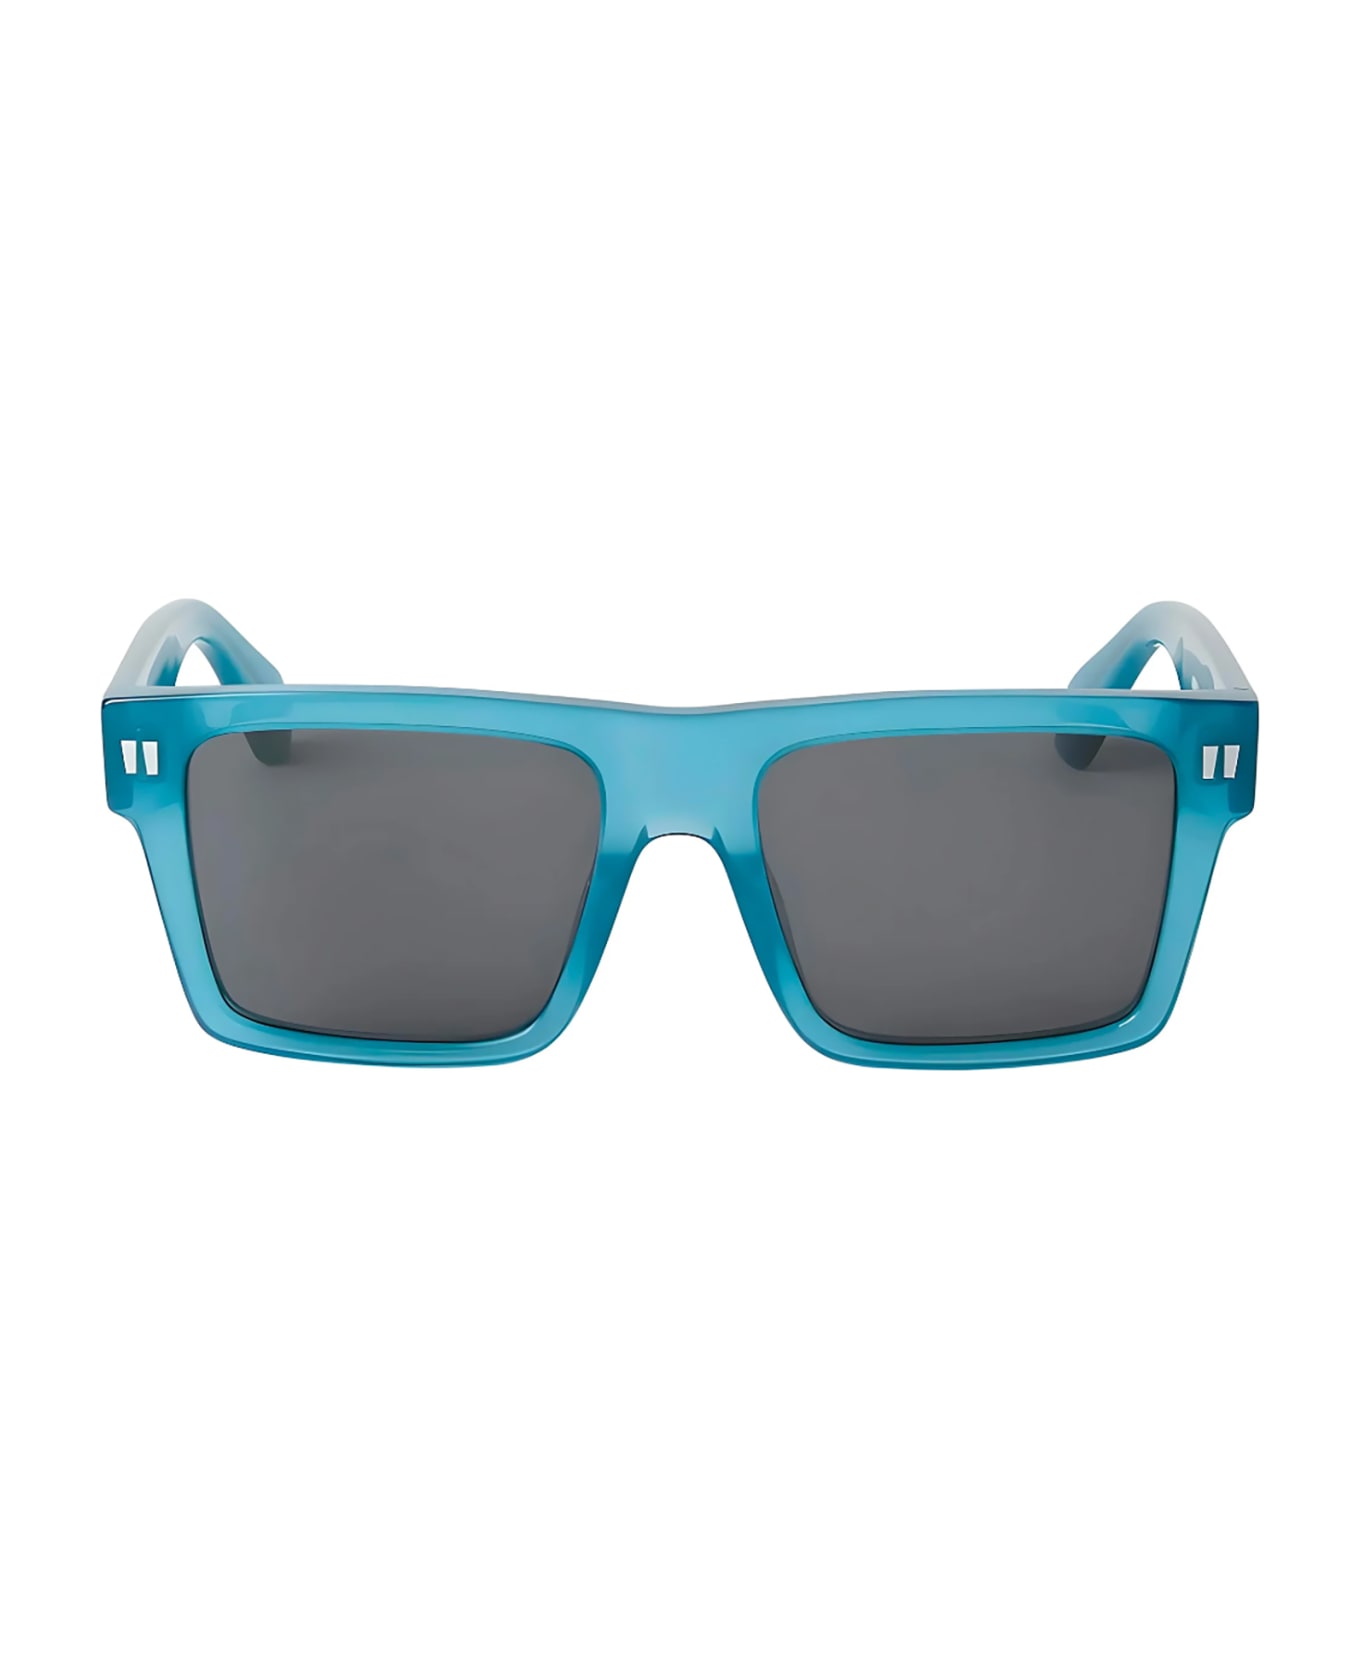 Off-White OERI109 LAWTON Sunglasses - Navy Blue